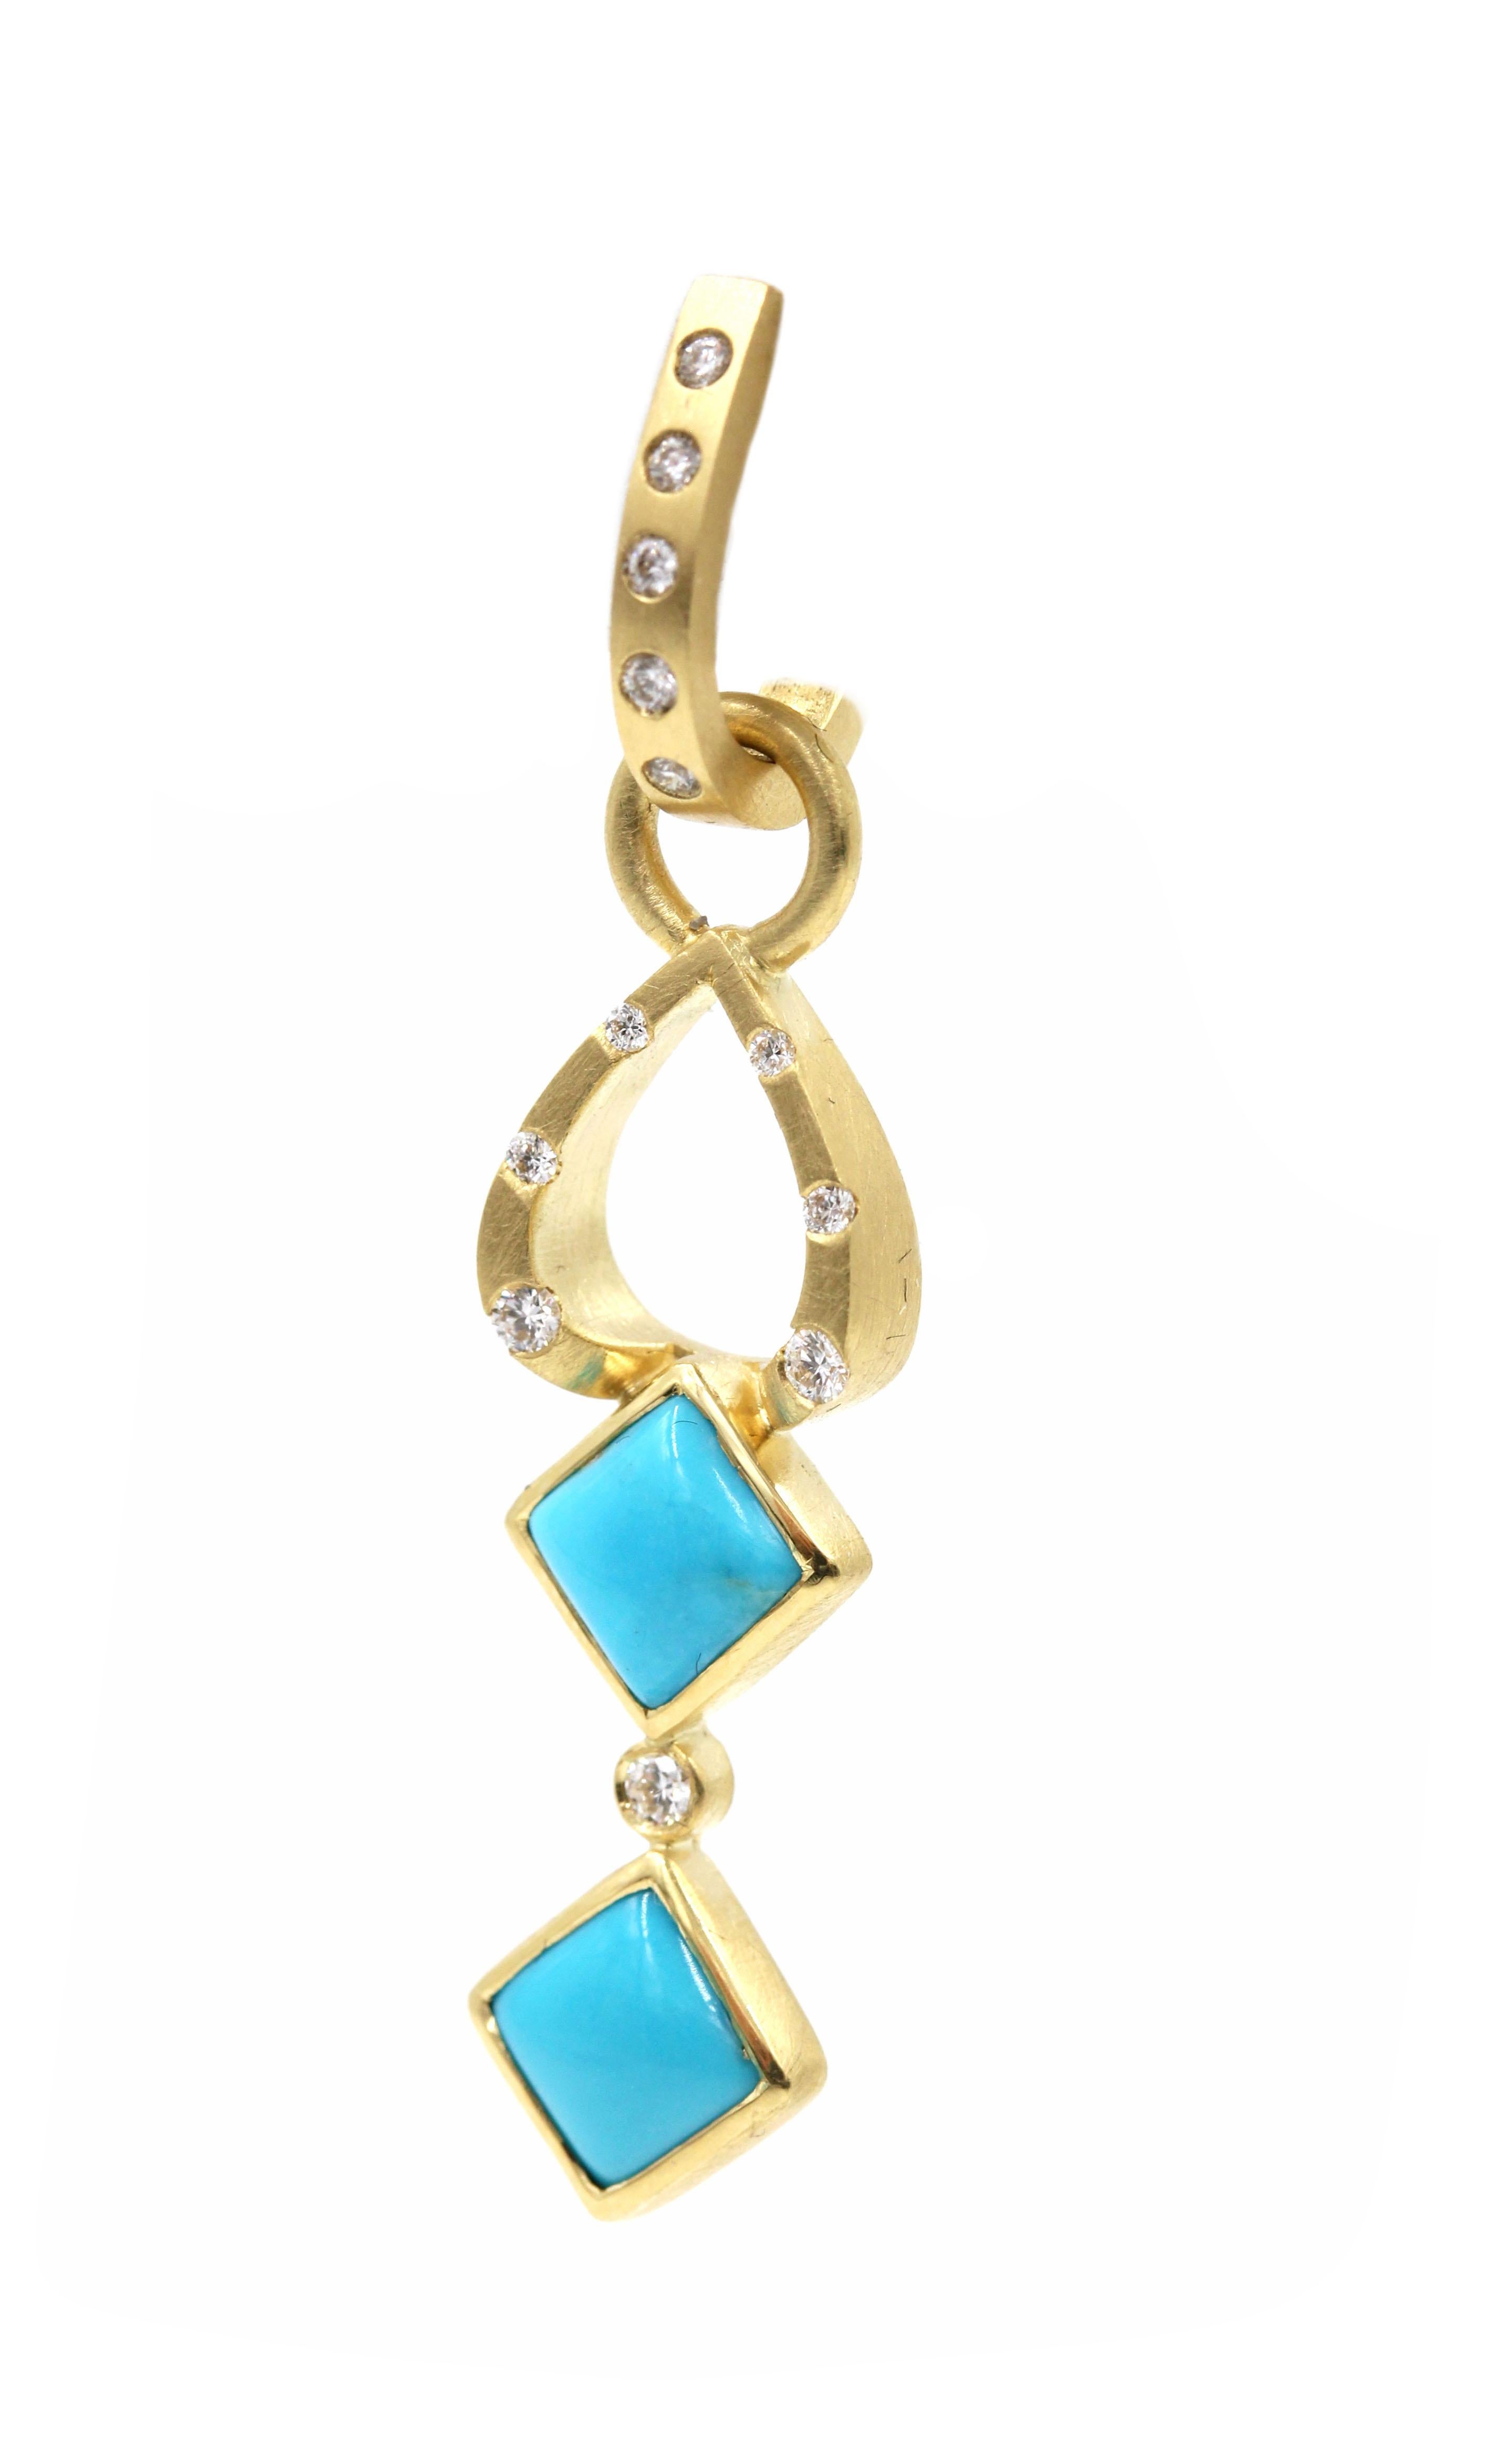 Contemporary Robin Waynee, Sleeping Beauty Earrings, VS1 Diamonds, Turquoise, 18 Karat Gold For Sale